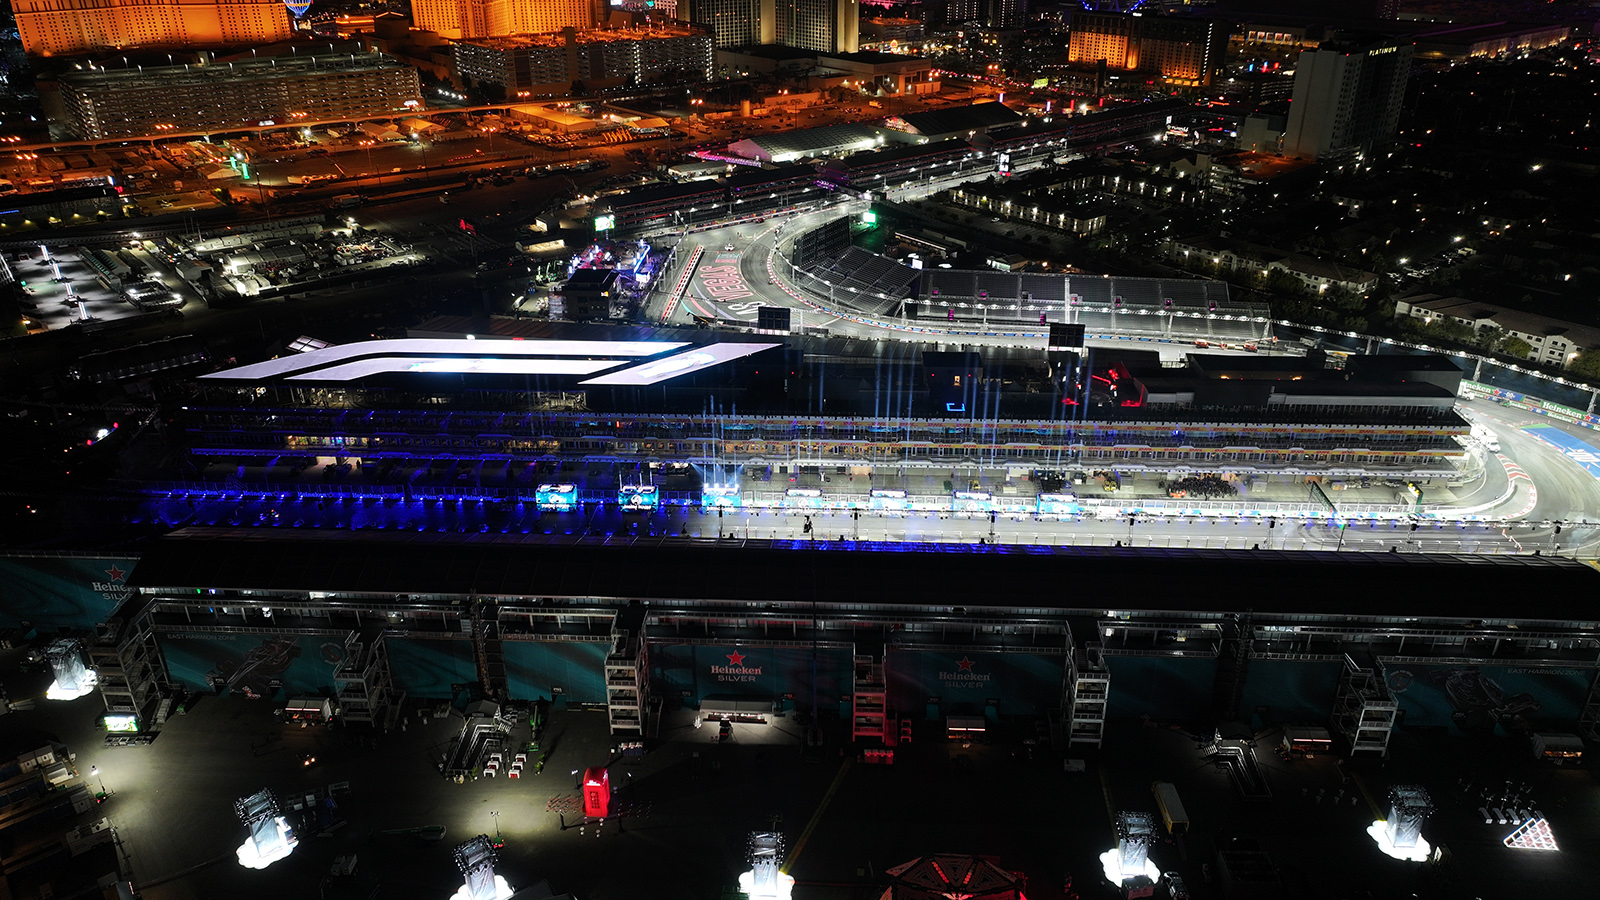 F1 Formula 1 logo displayed on Samsung LED display